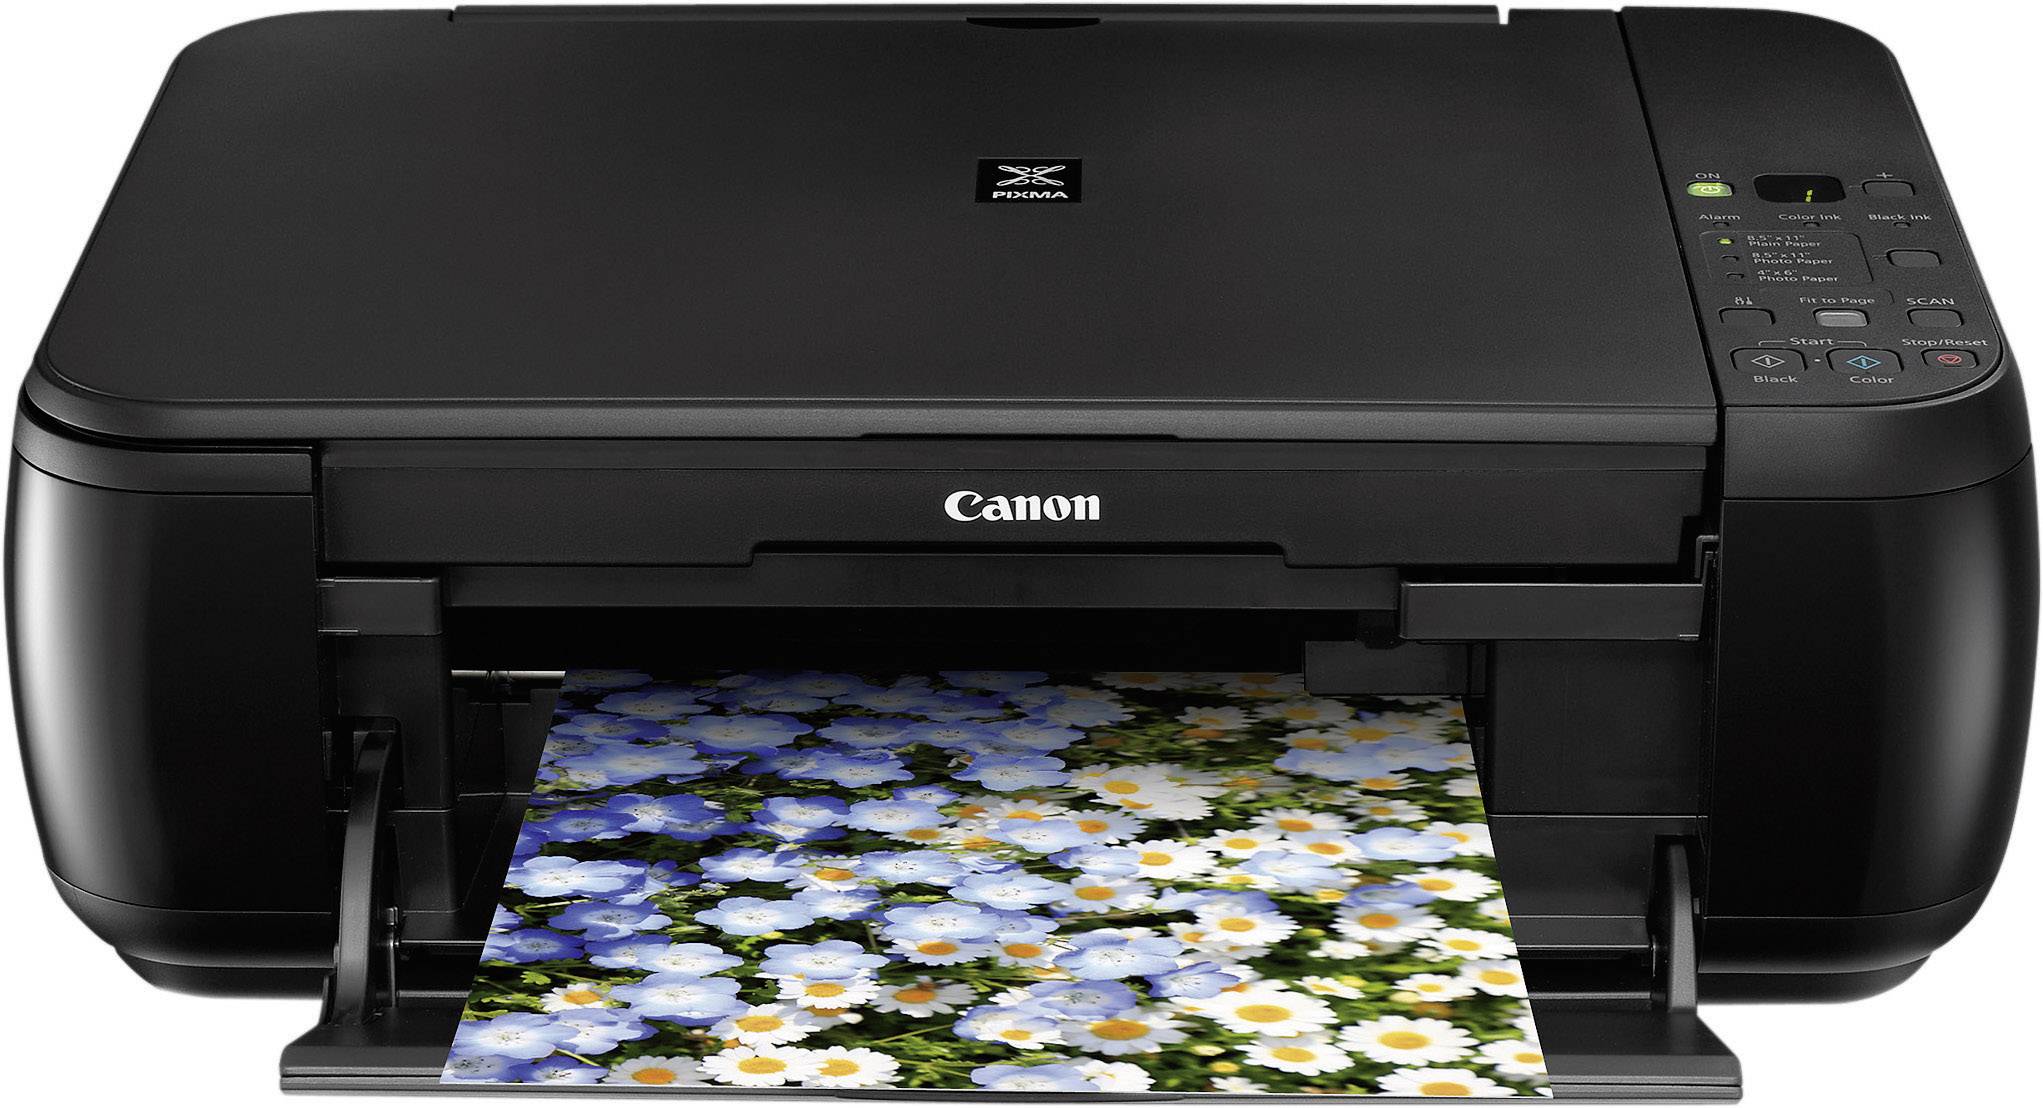 canon mp280 scanner software windows 10